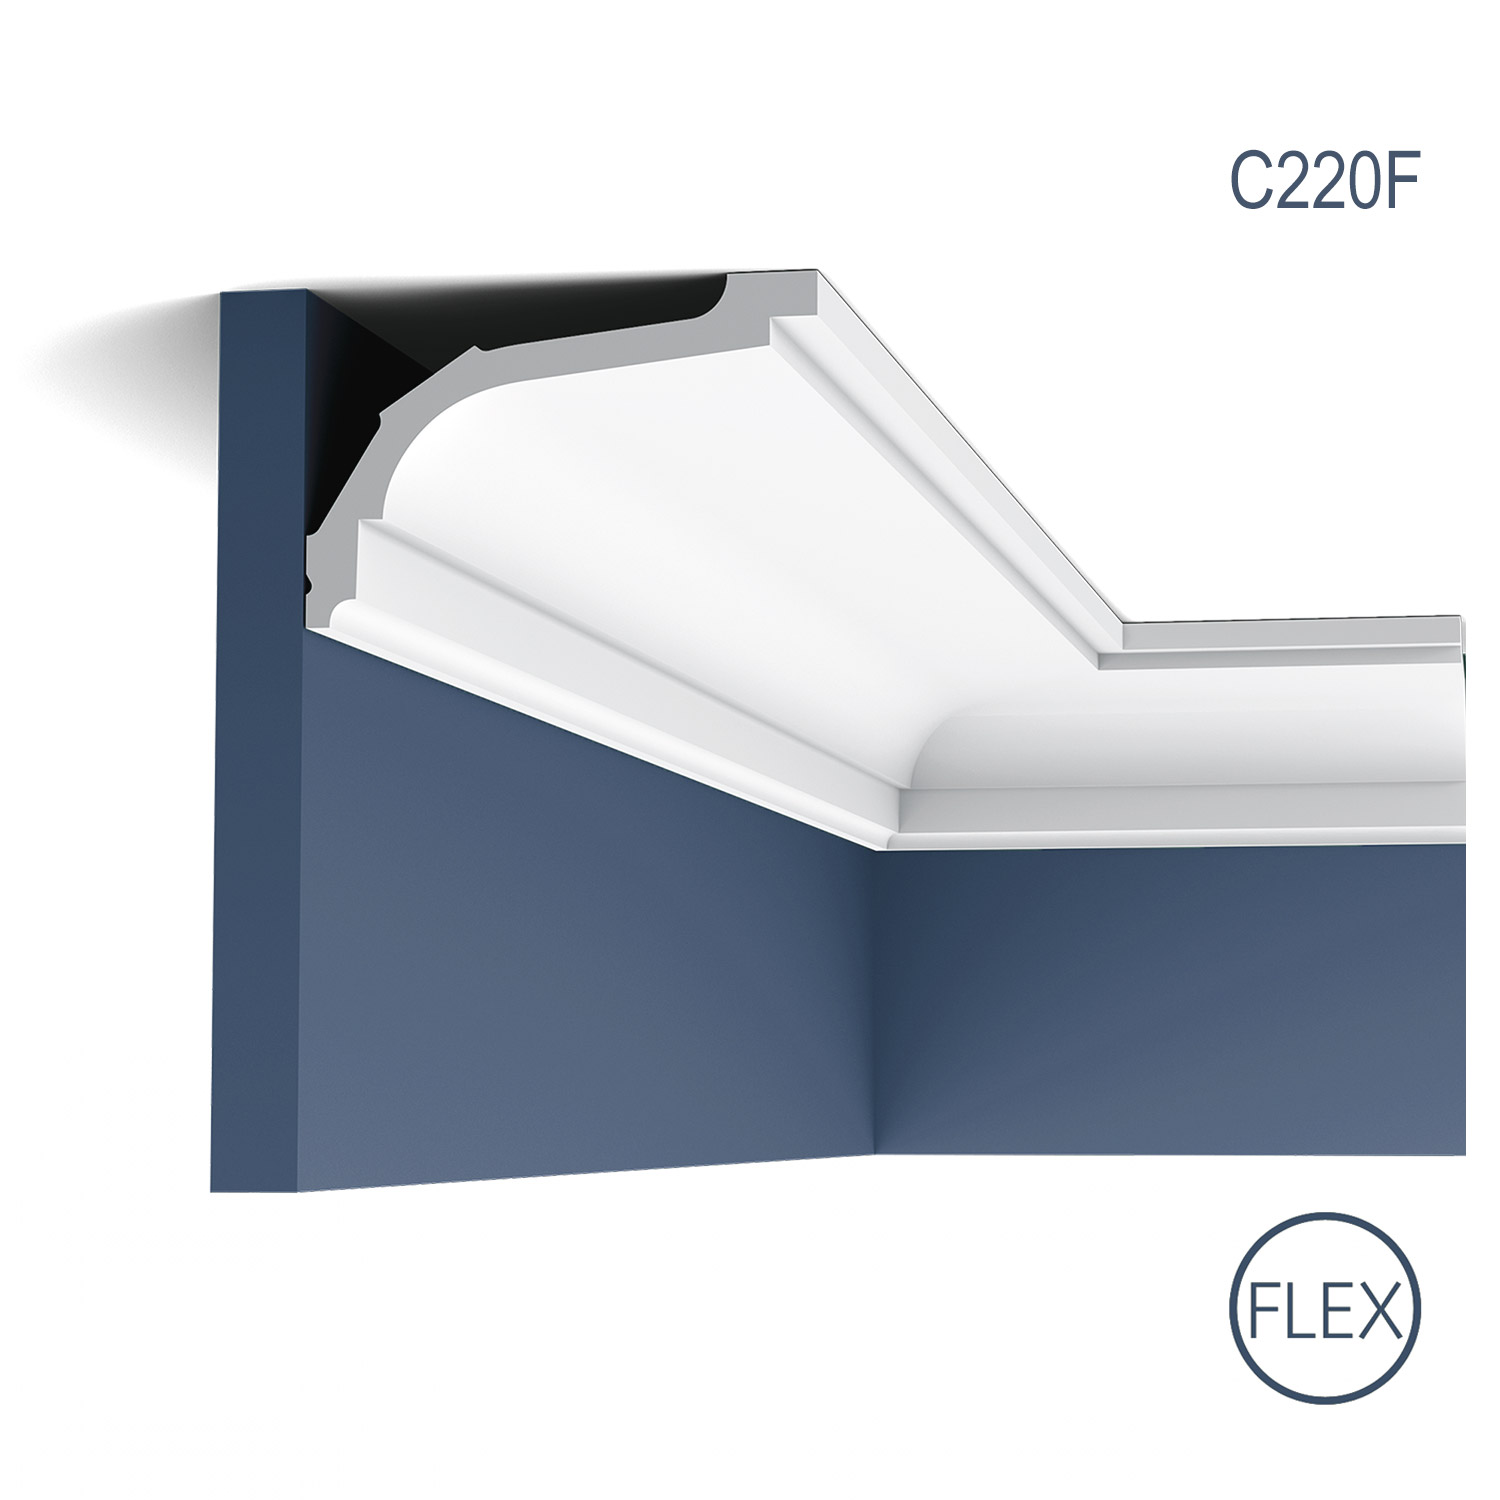 Cornisa Flex Luxxus C220F, Dimensiuni: 200 X 7.6 X 11.6 cm, Orac Decor Orac Decor